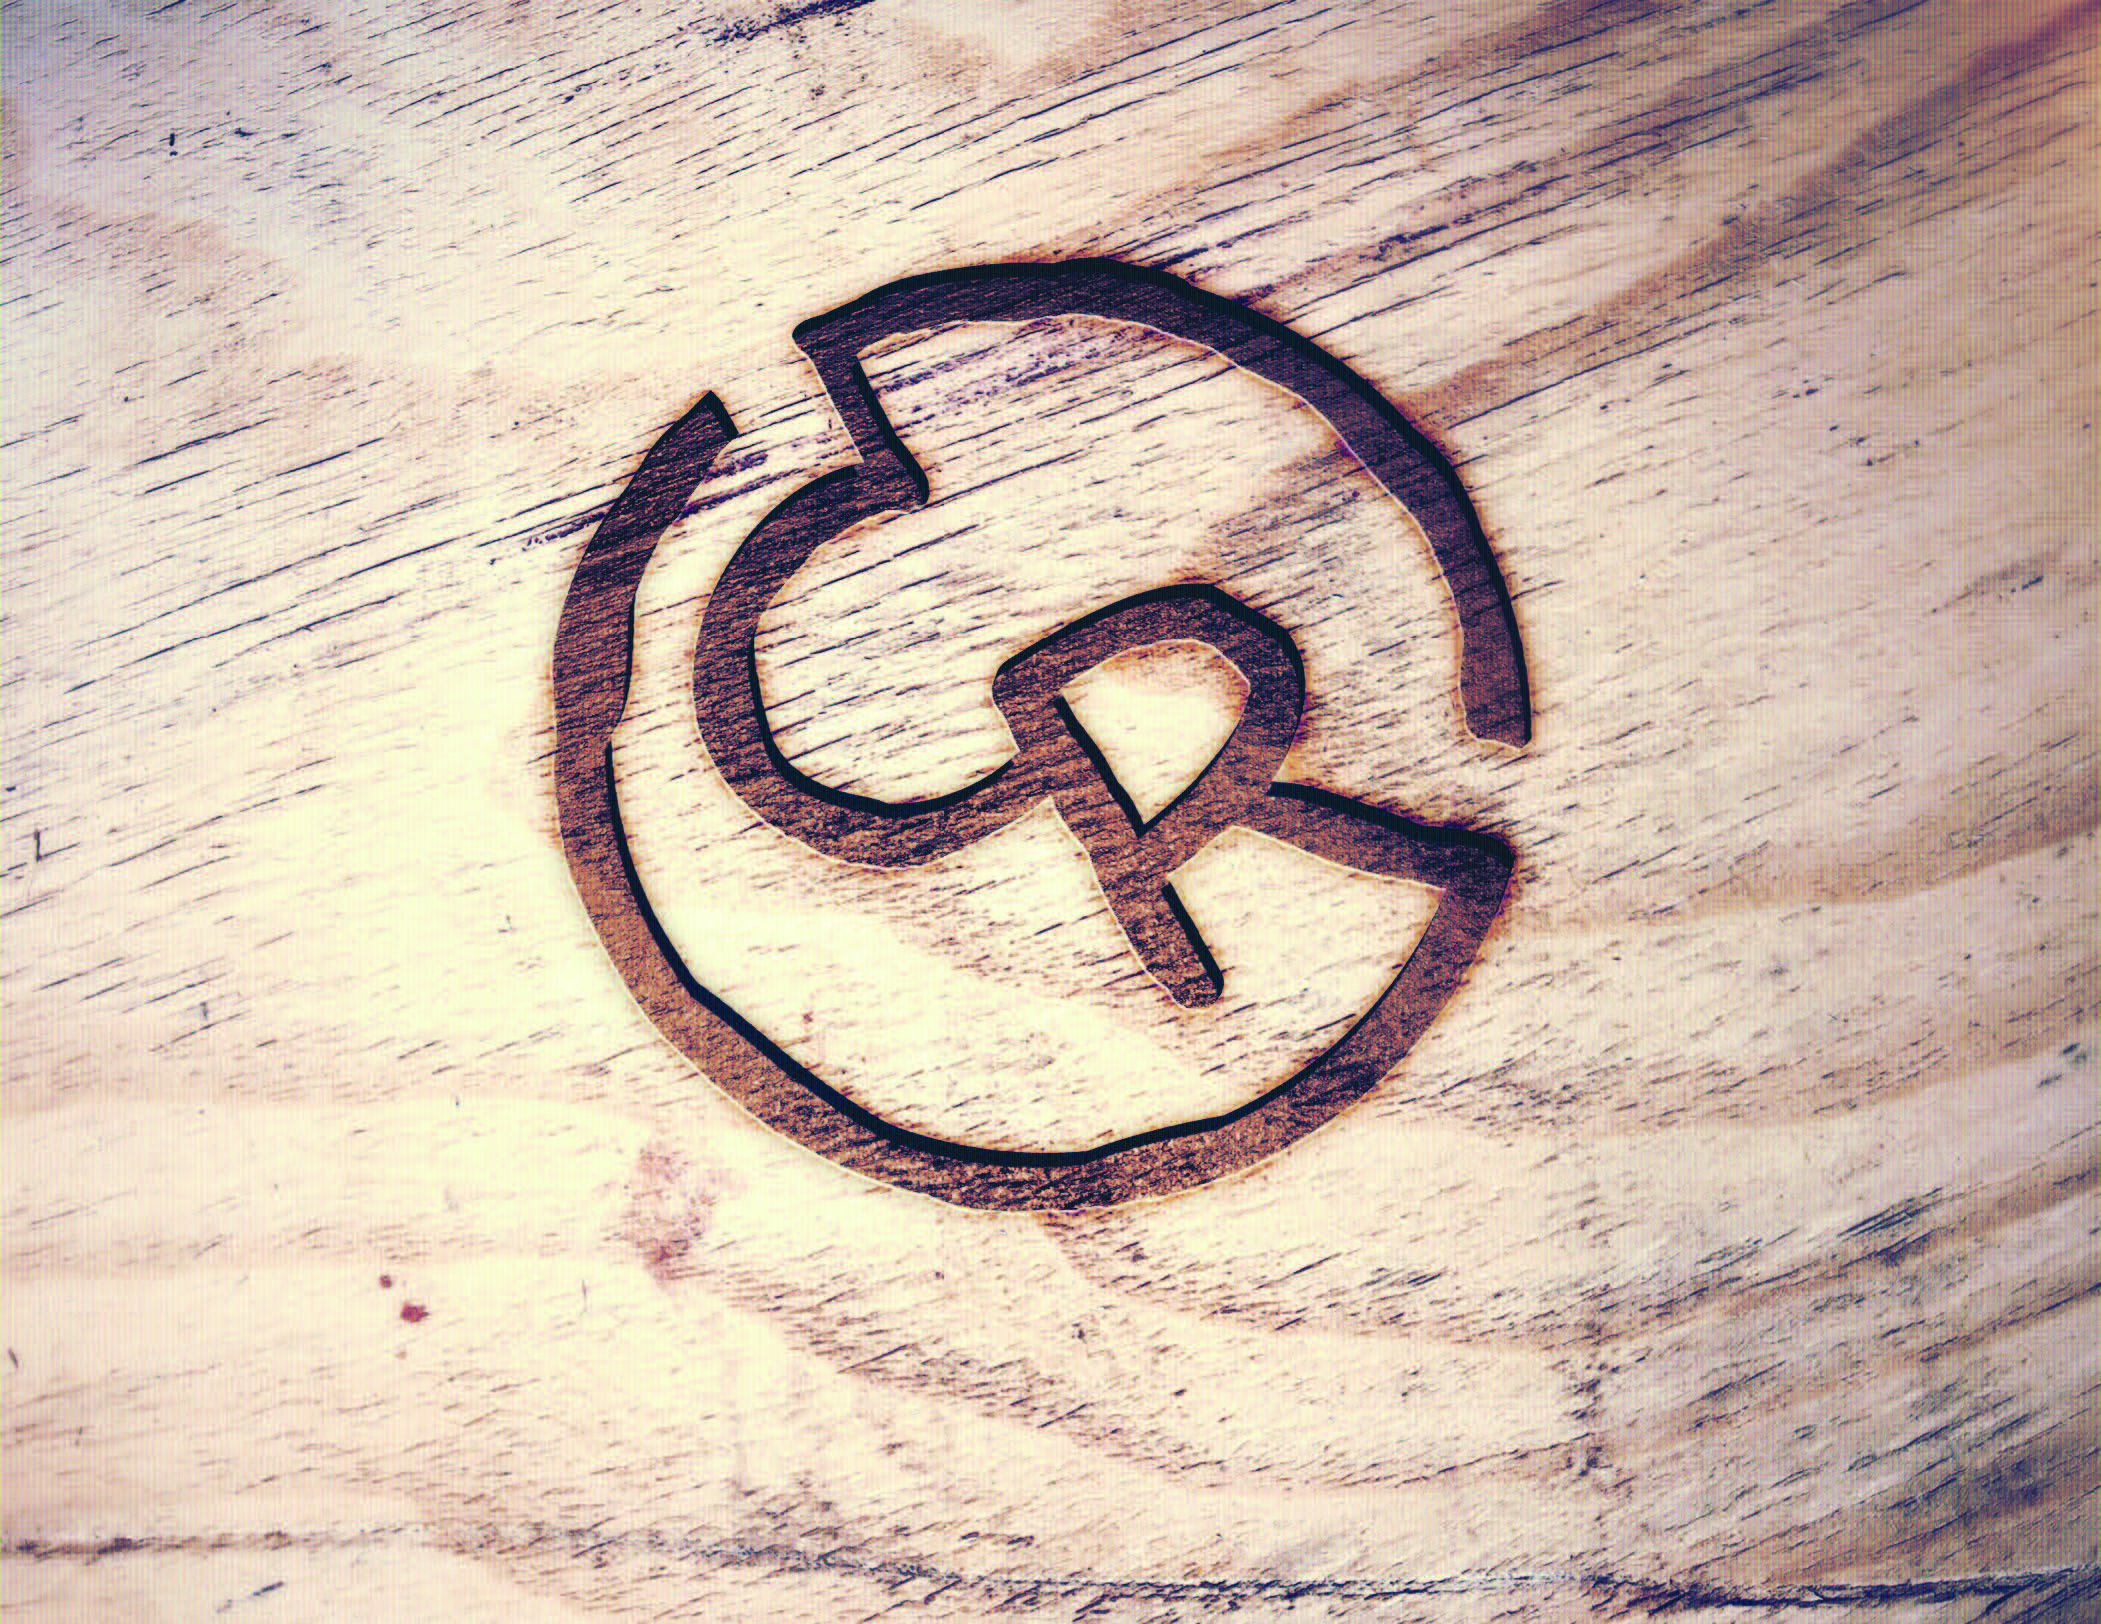 CR-logo-brand - Cornerstone Ranch